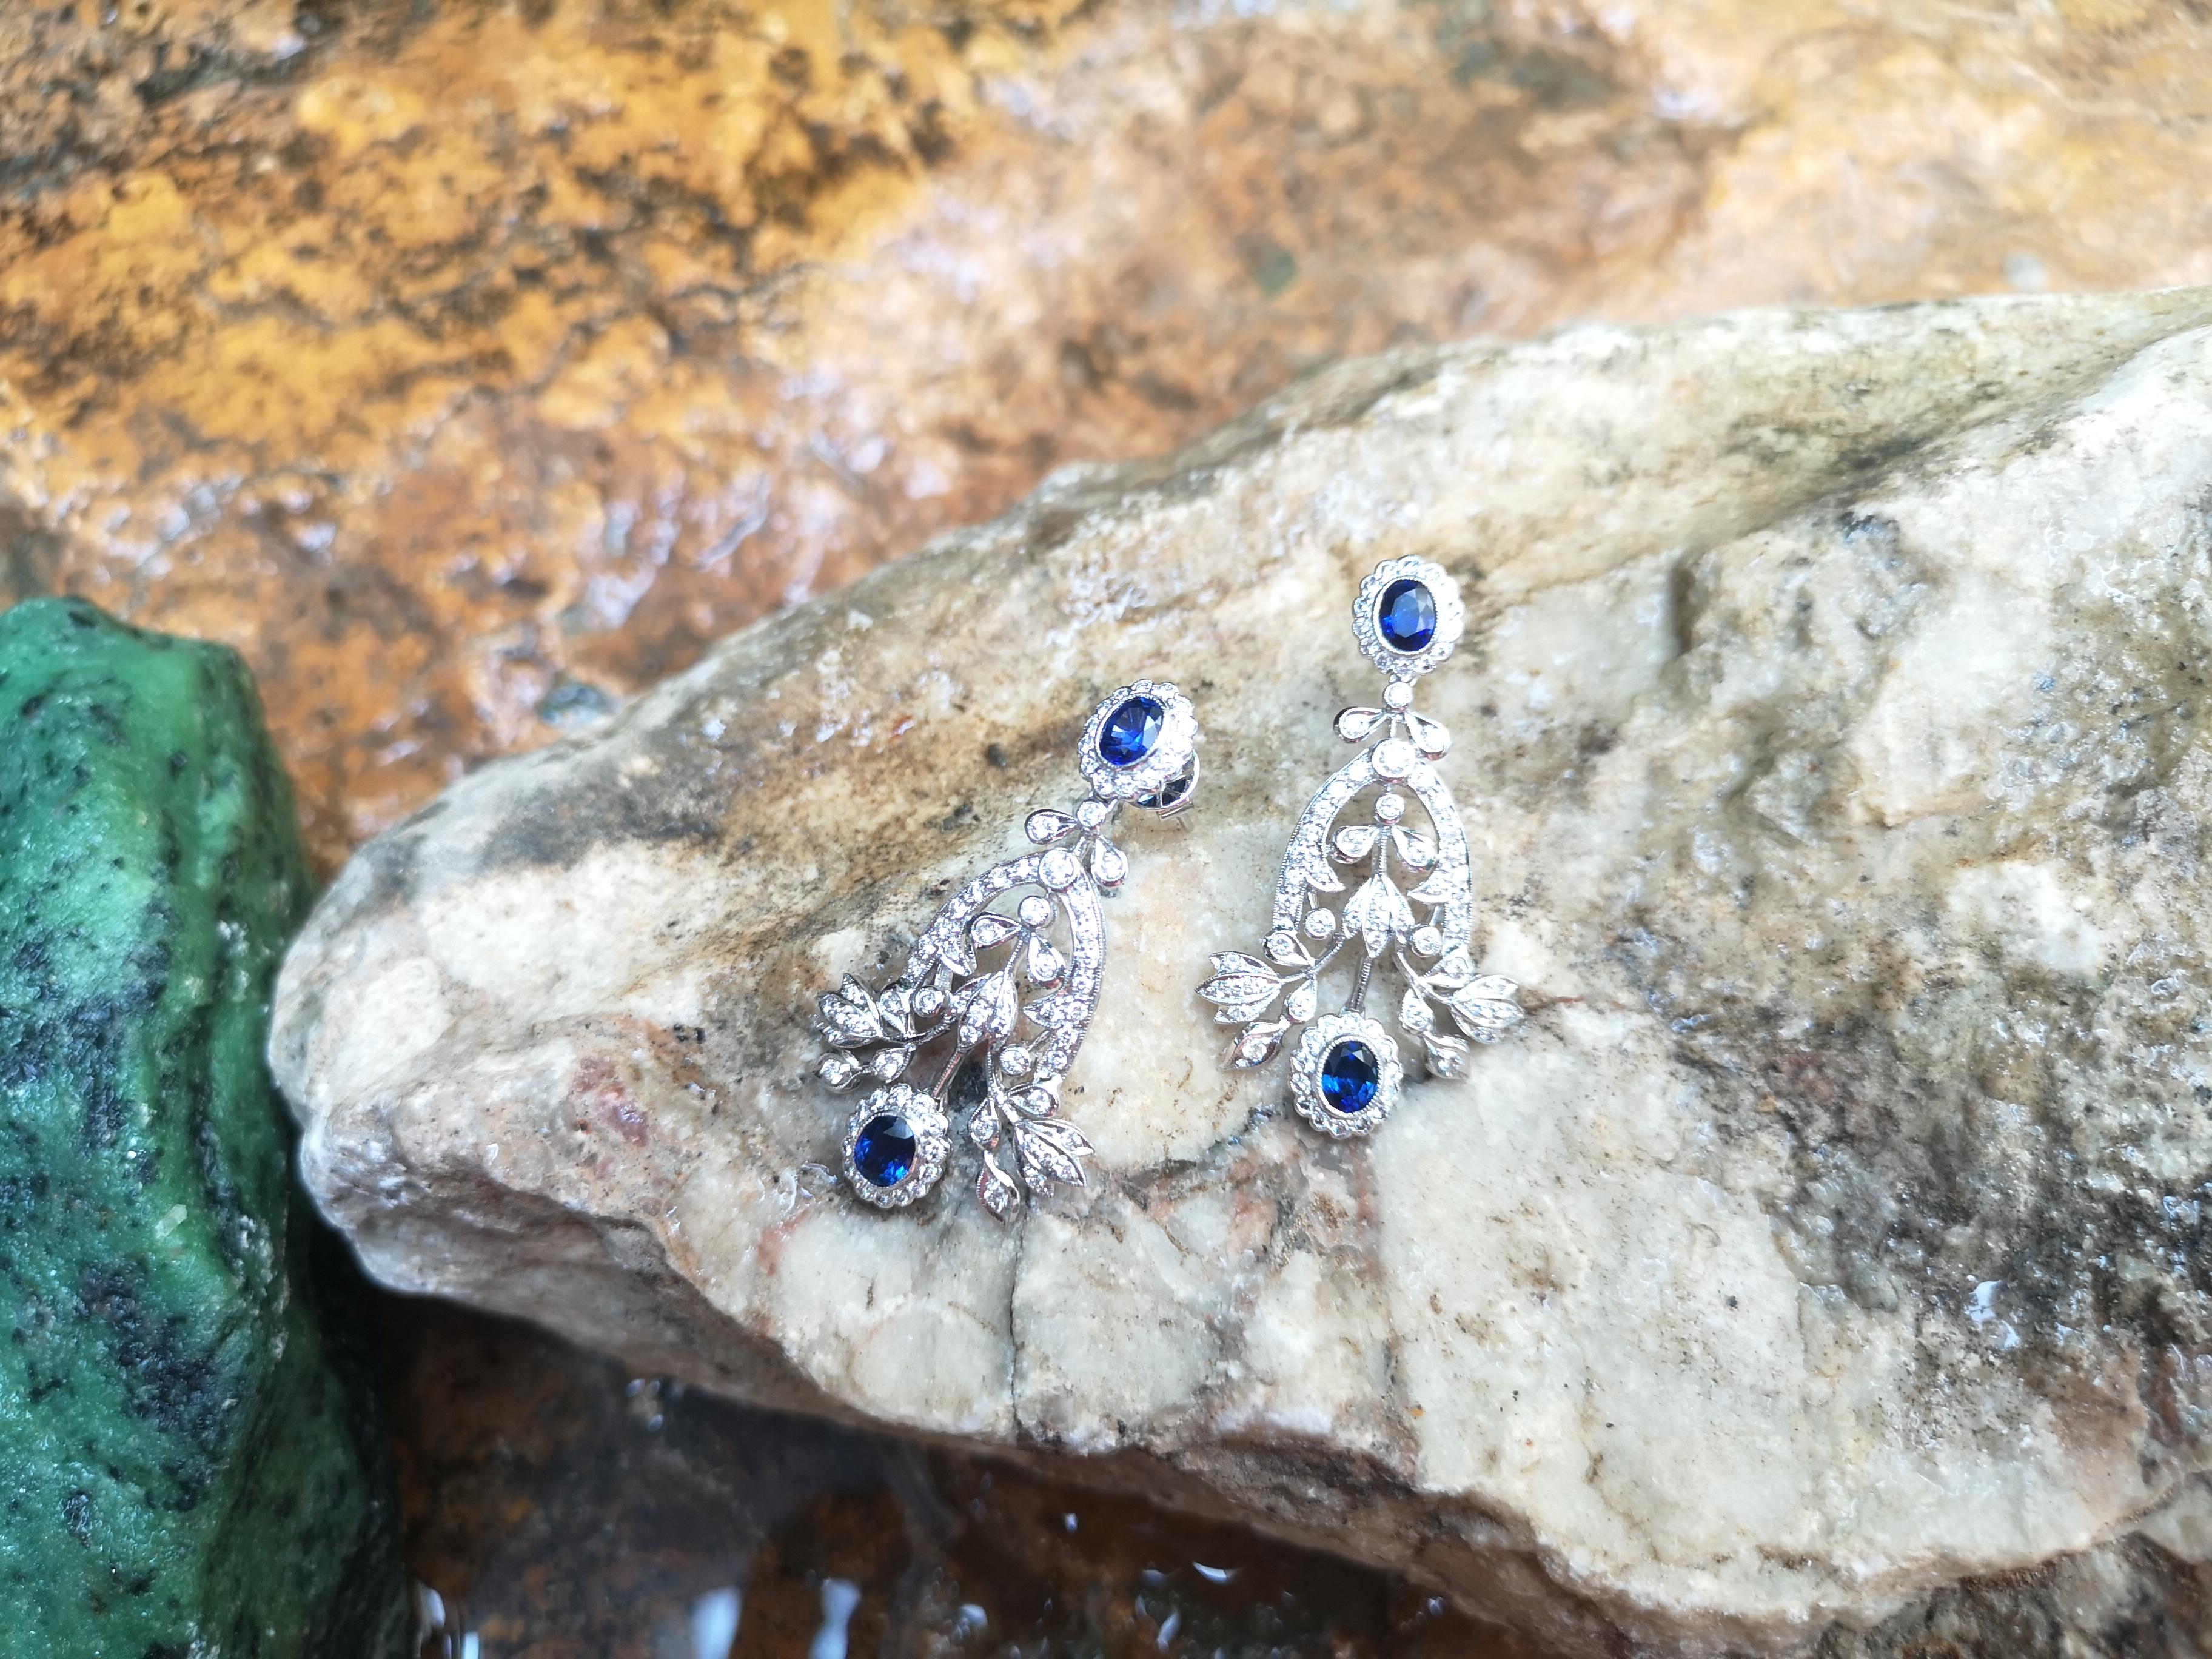 Oval Cut Blue Sapphire with Diamond Earrings Set in 18 Karat White Gold Settings For Sale